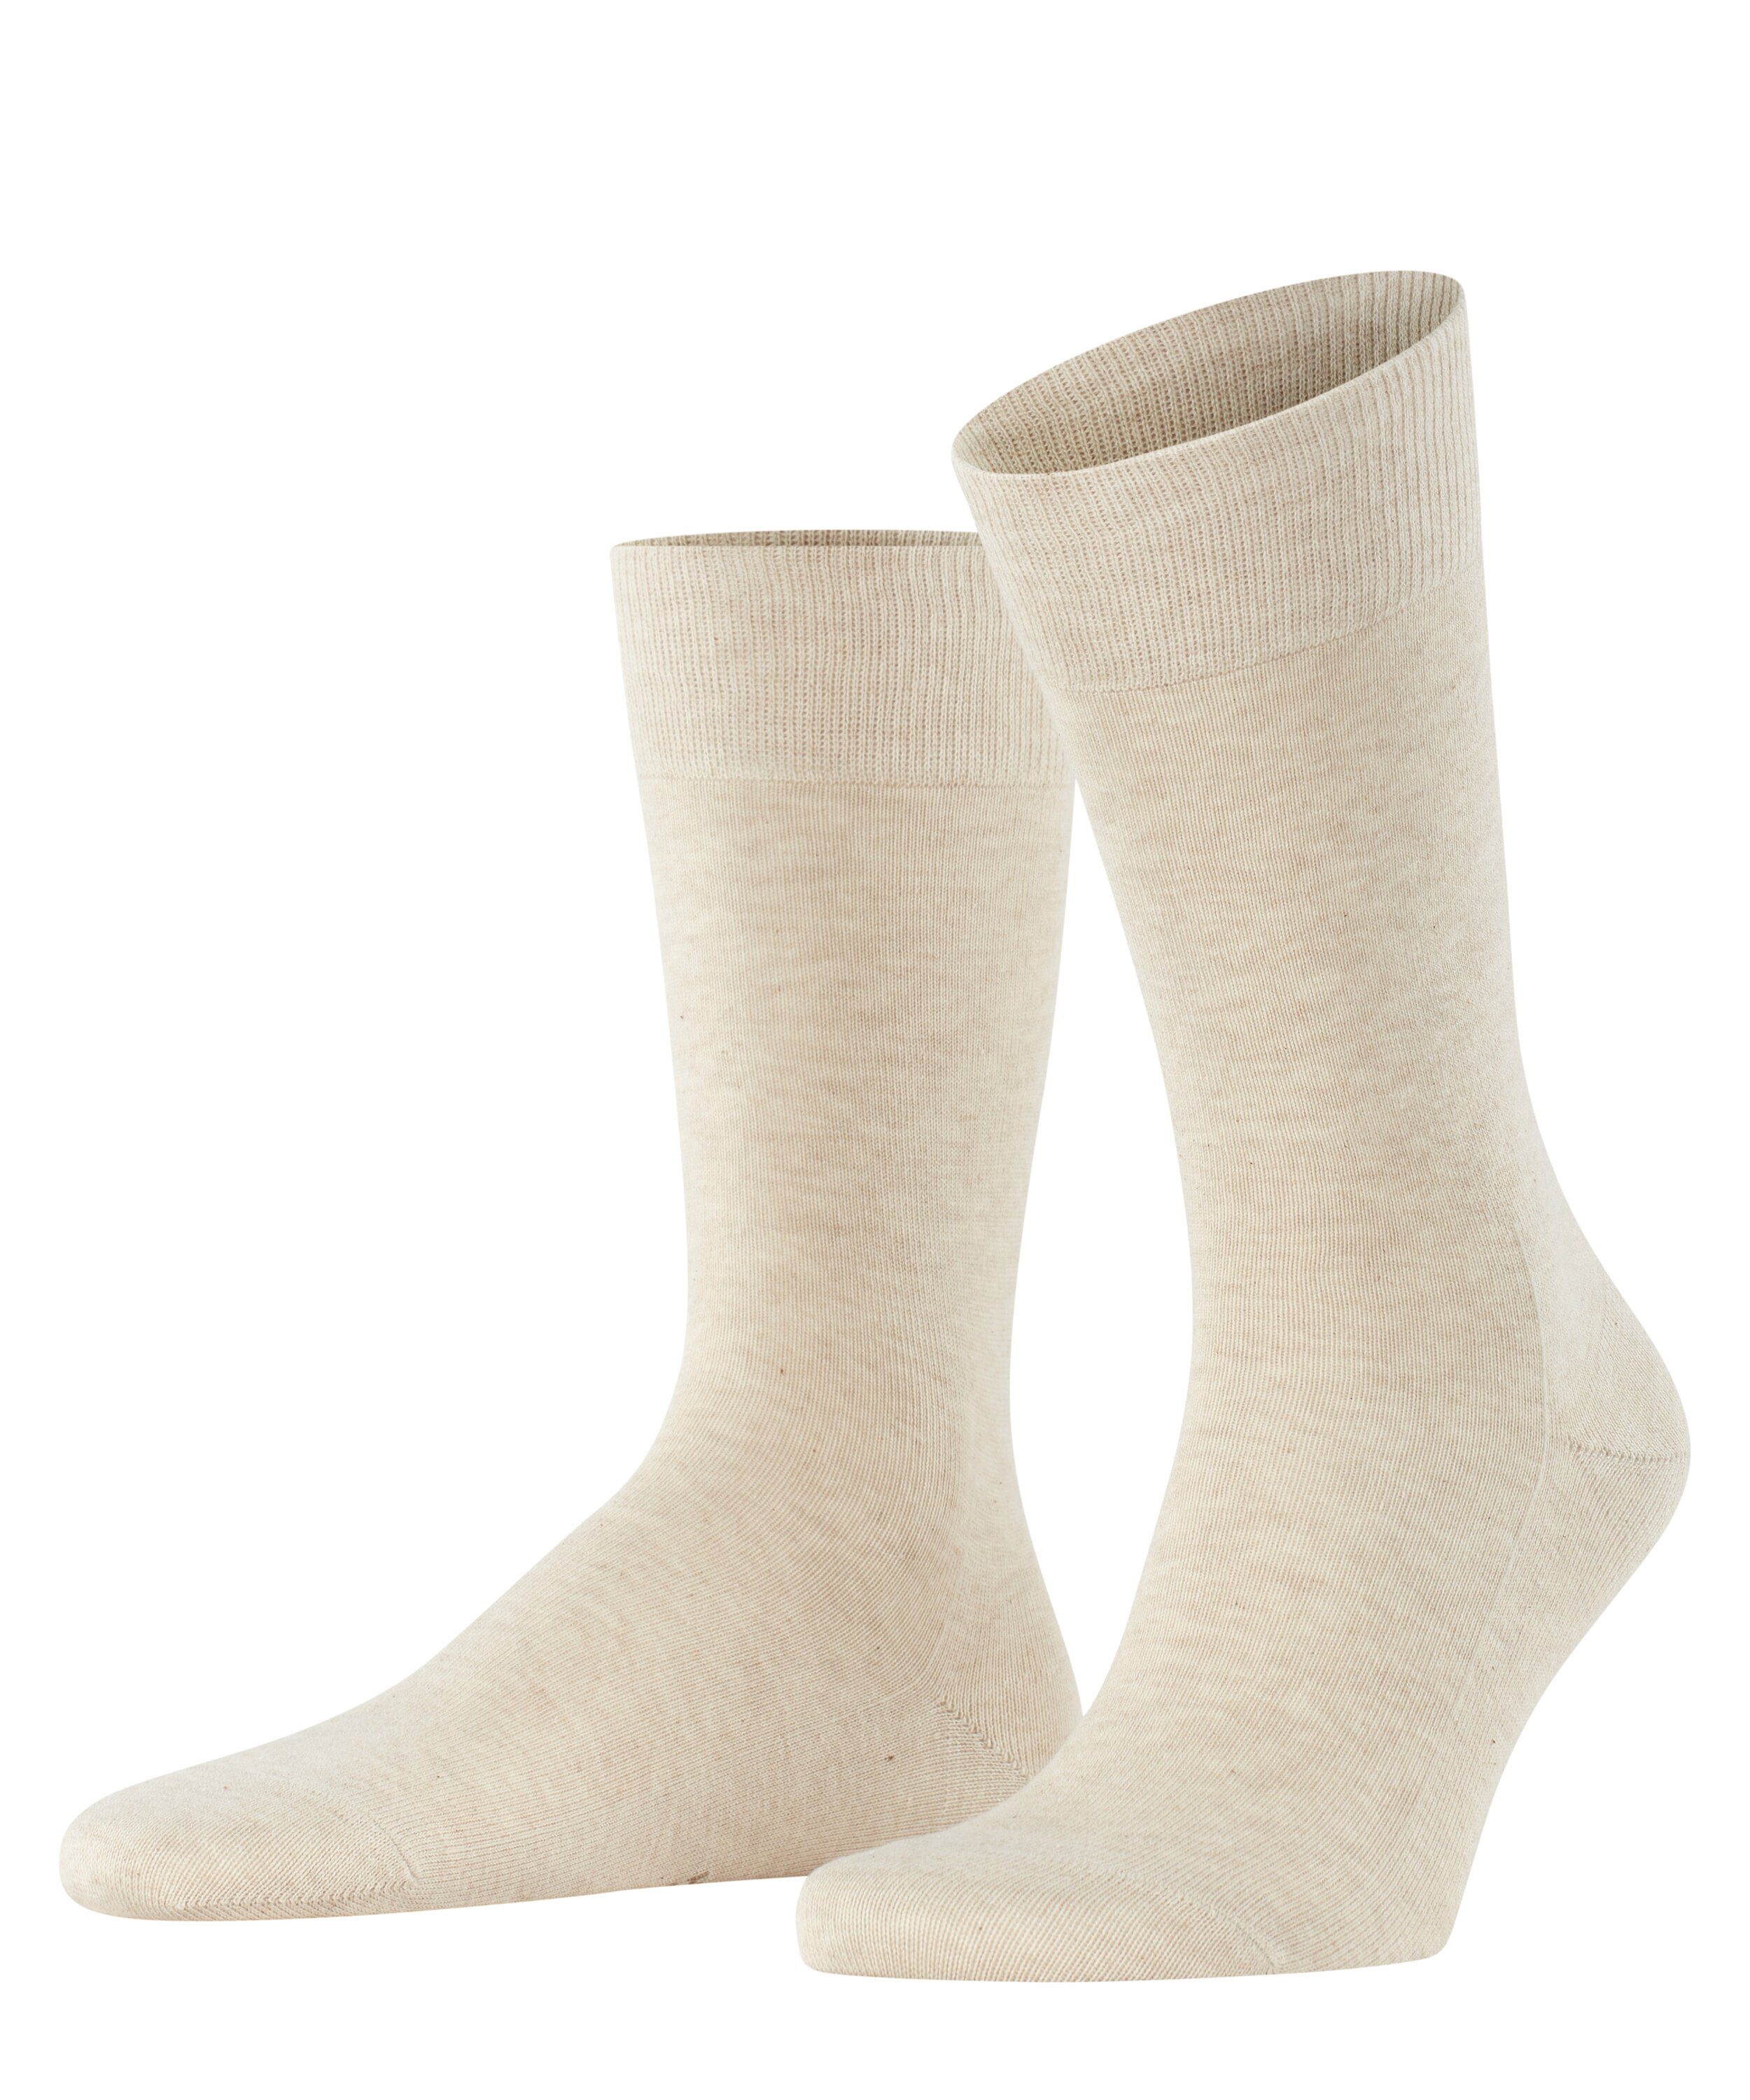 Verkaufen Sie zum niedrigsten Preis! FALKE Socken Family (1-Paar) sand mel. (4650)